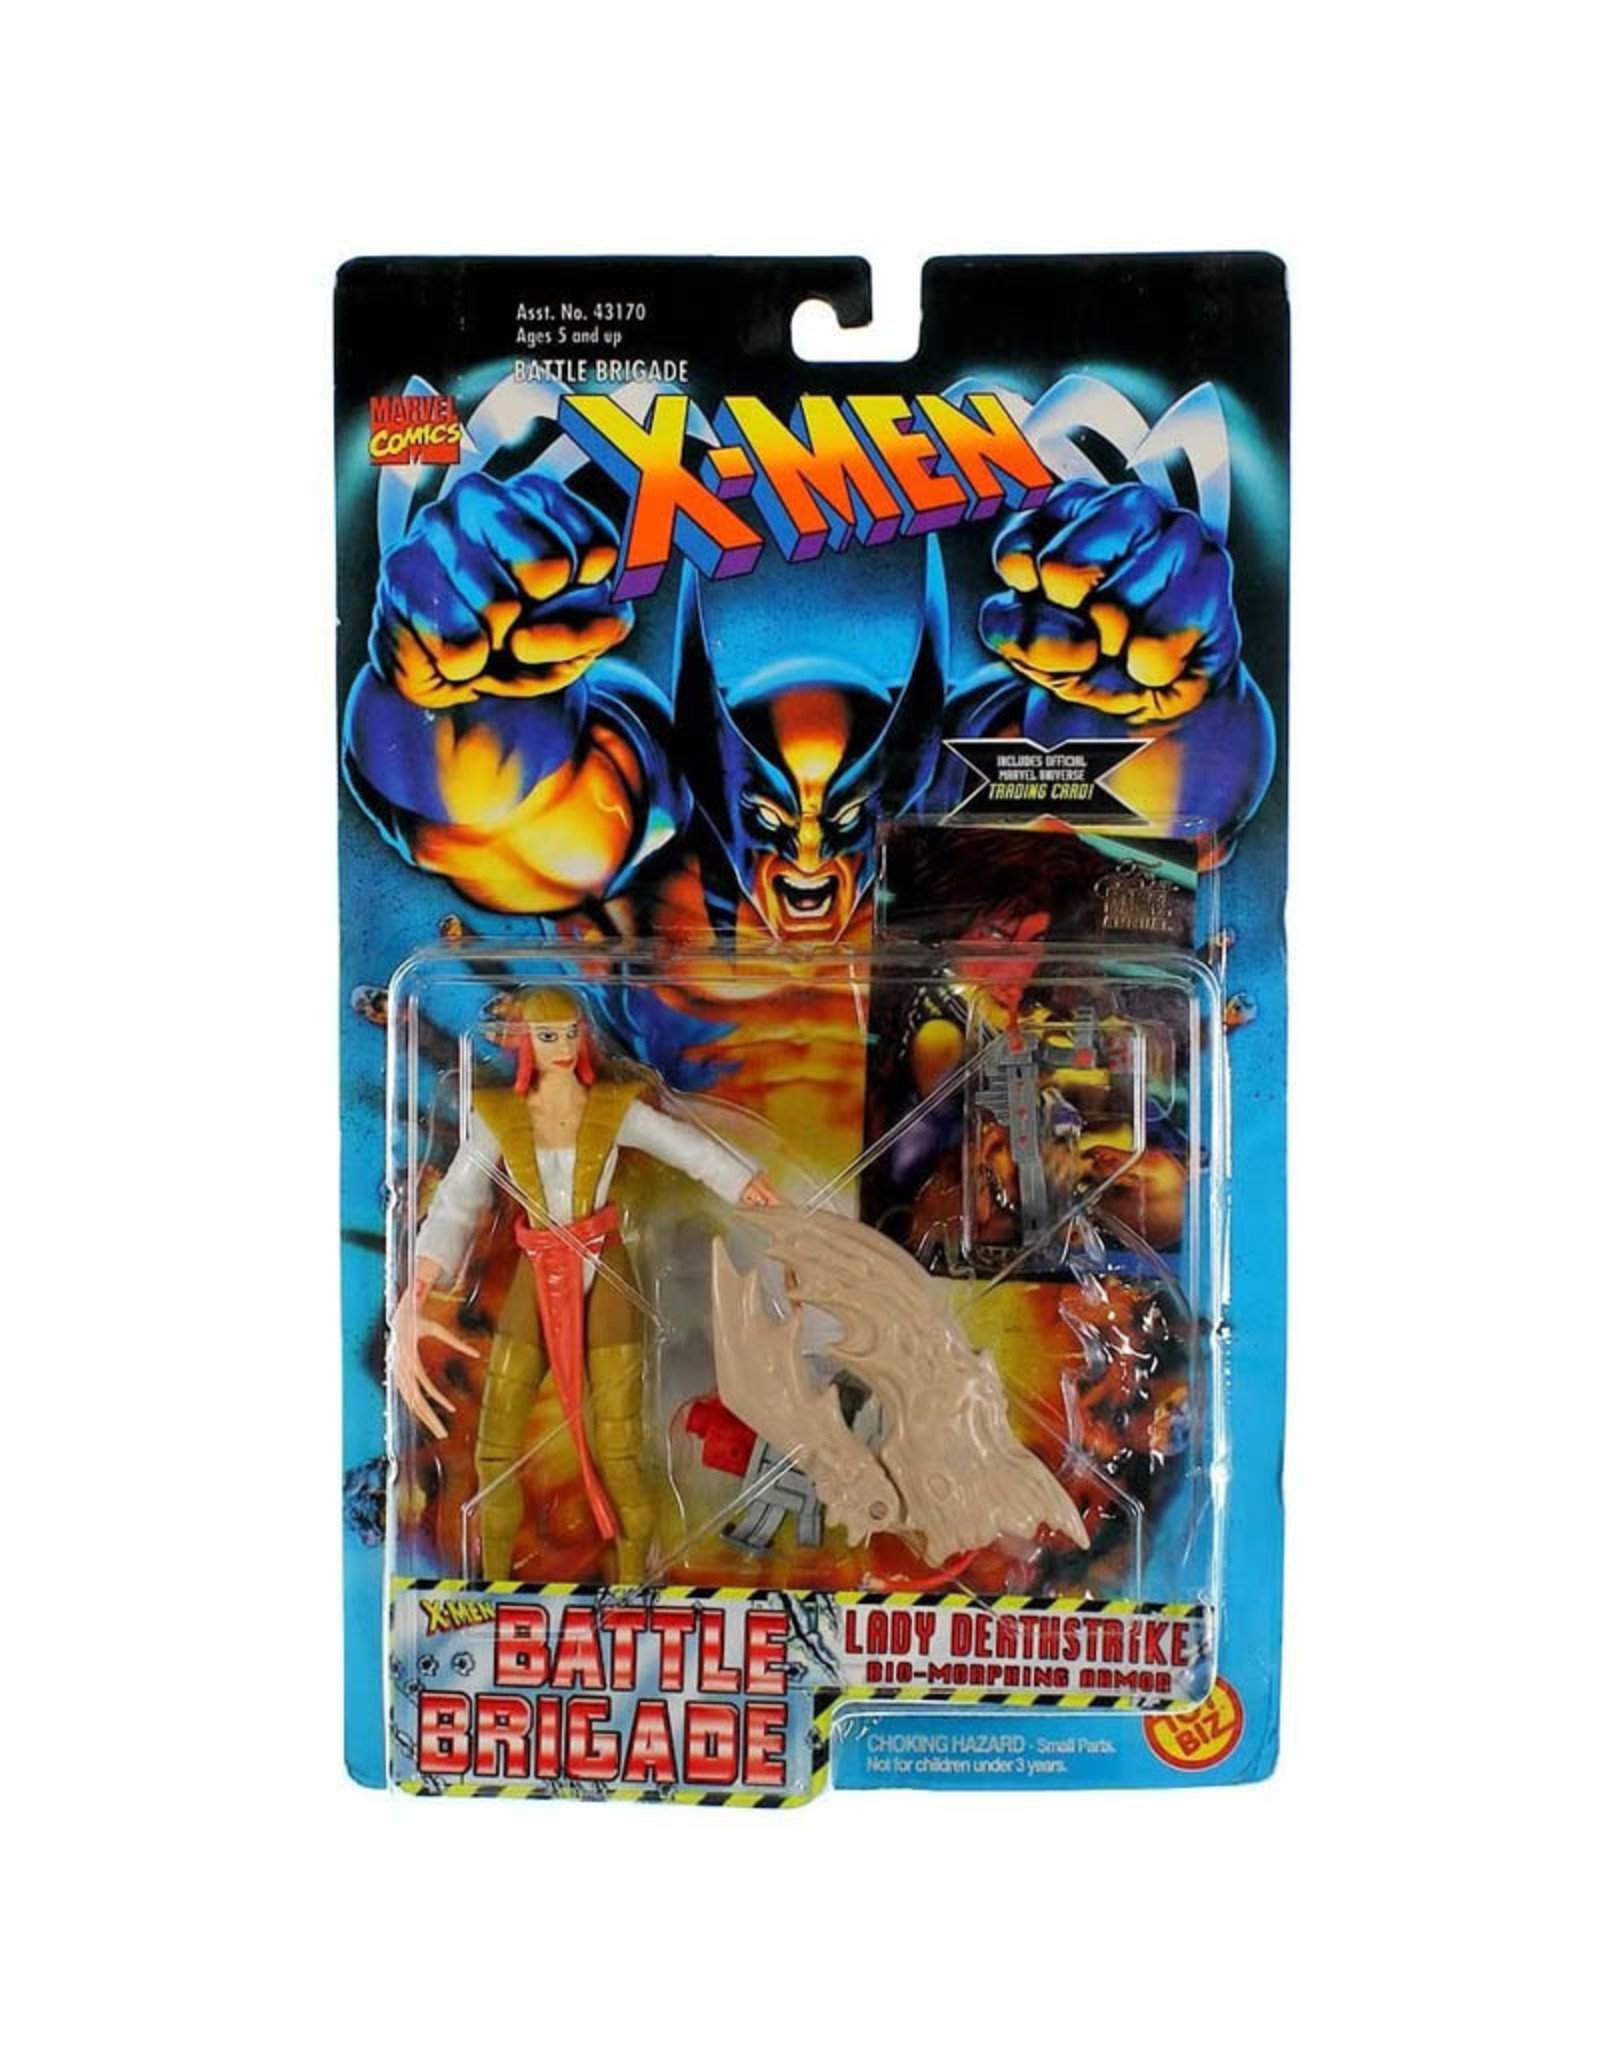 Toy Biz Marvel X-men: Lady Deathstrike Figure